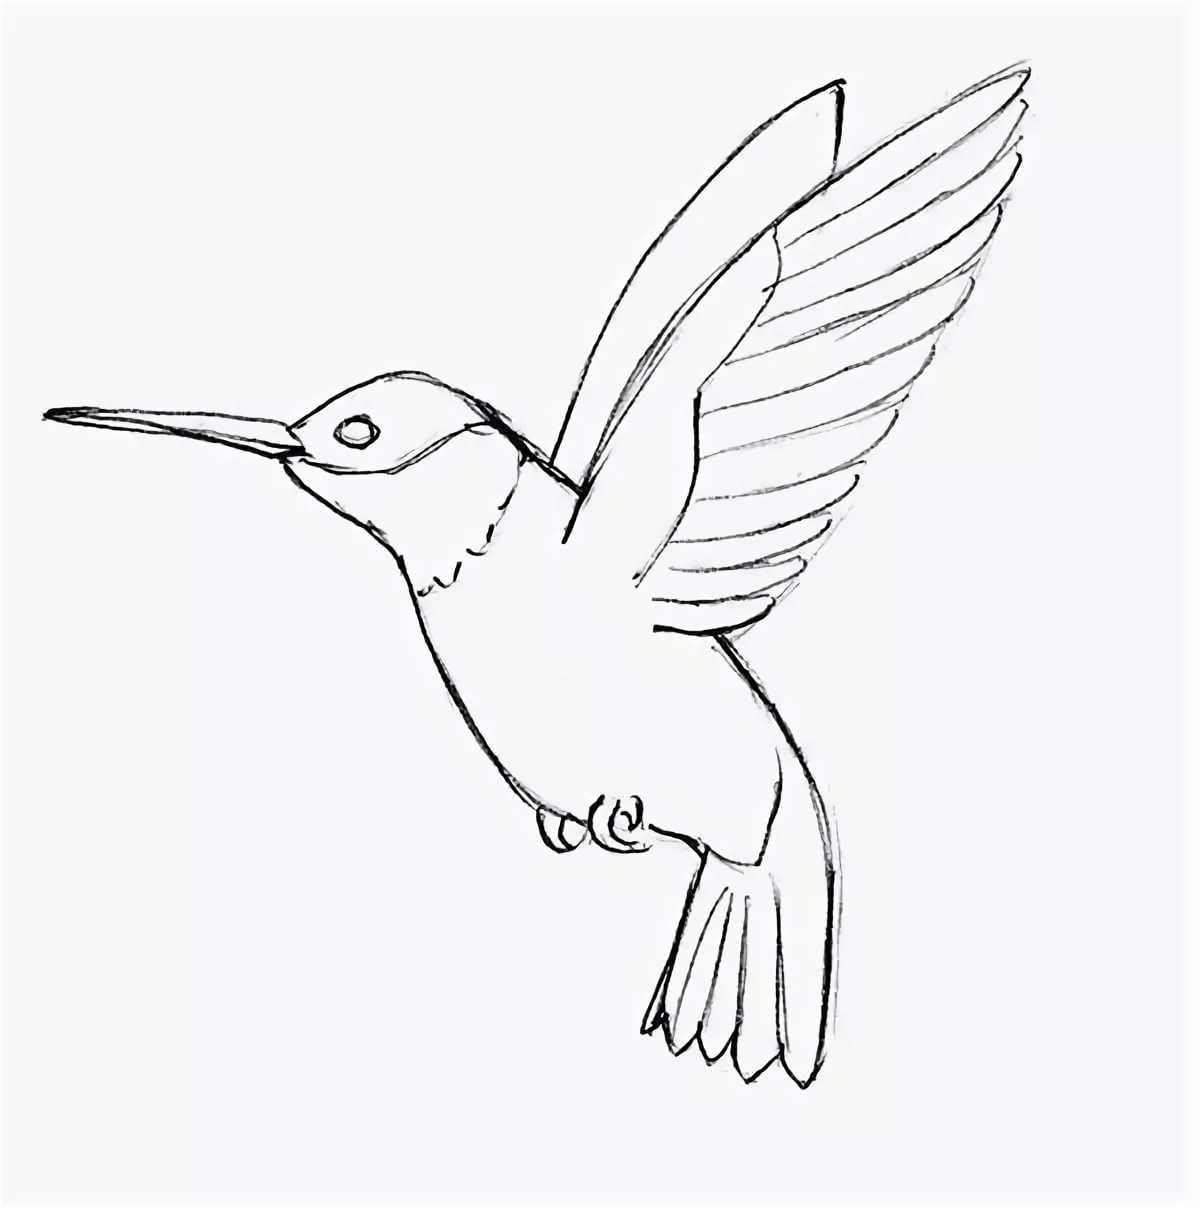 Рисунок птиц карандашом легкие. Птица Колибри для срисовки. Рисунок птицы карандашом для срисовки. Колибри карандашом. Рисунок Колибри карандашом для срисовки.